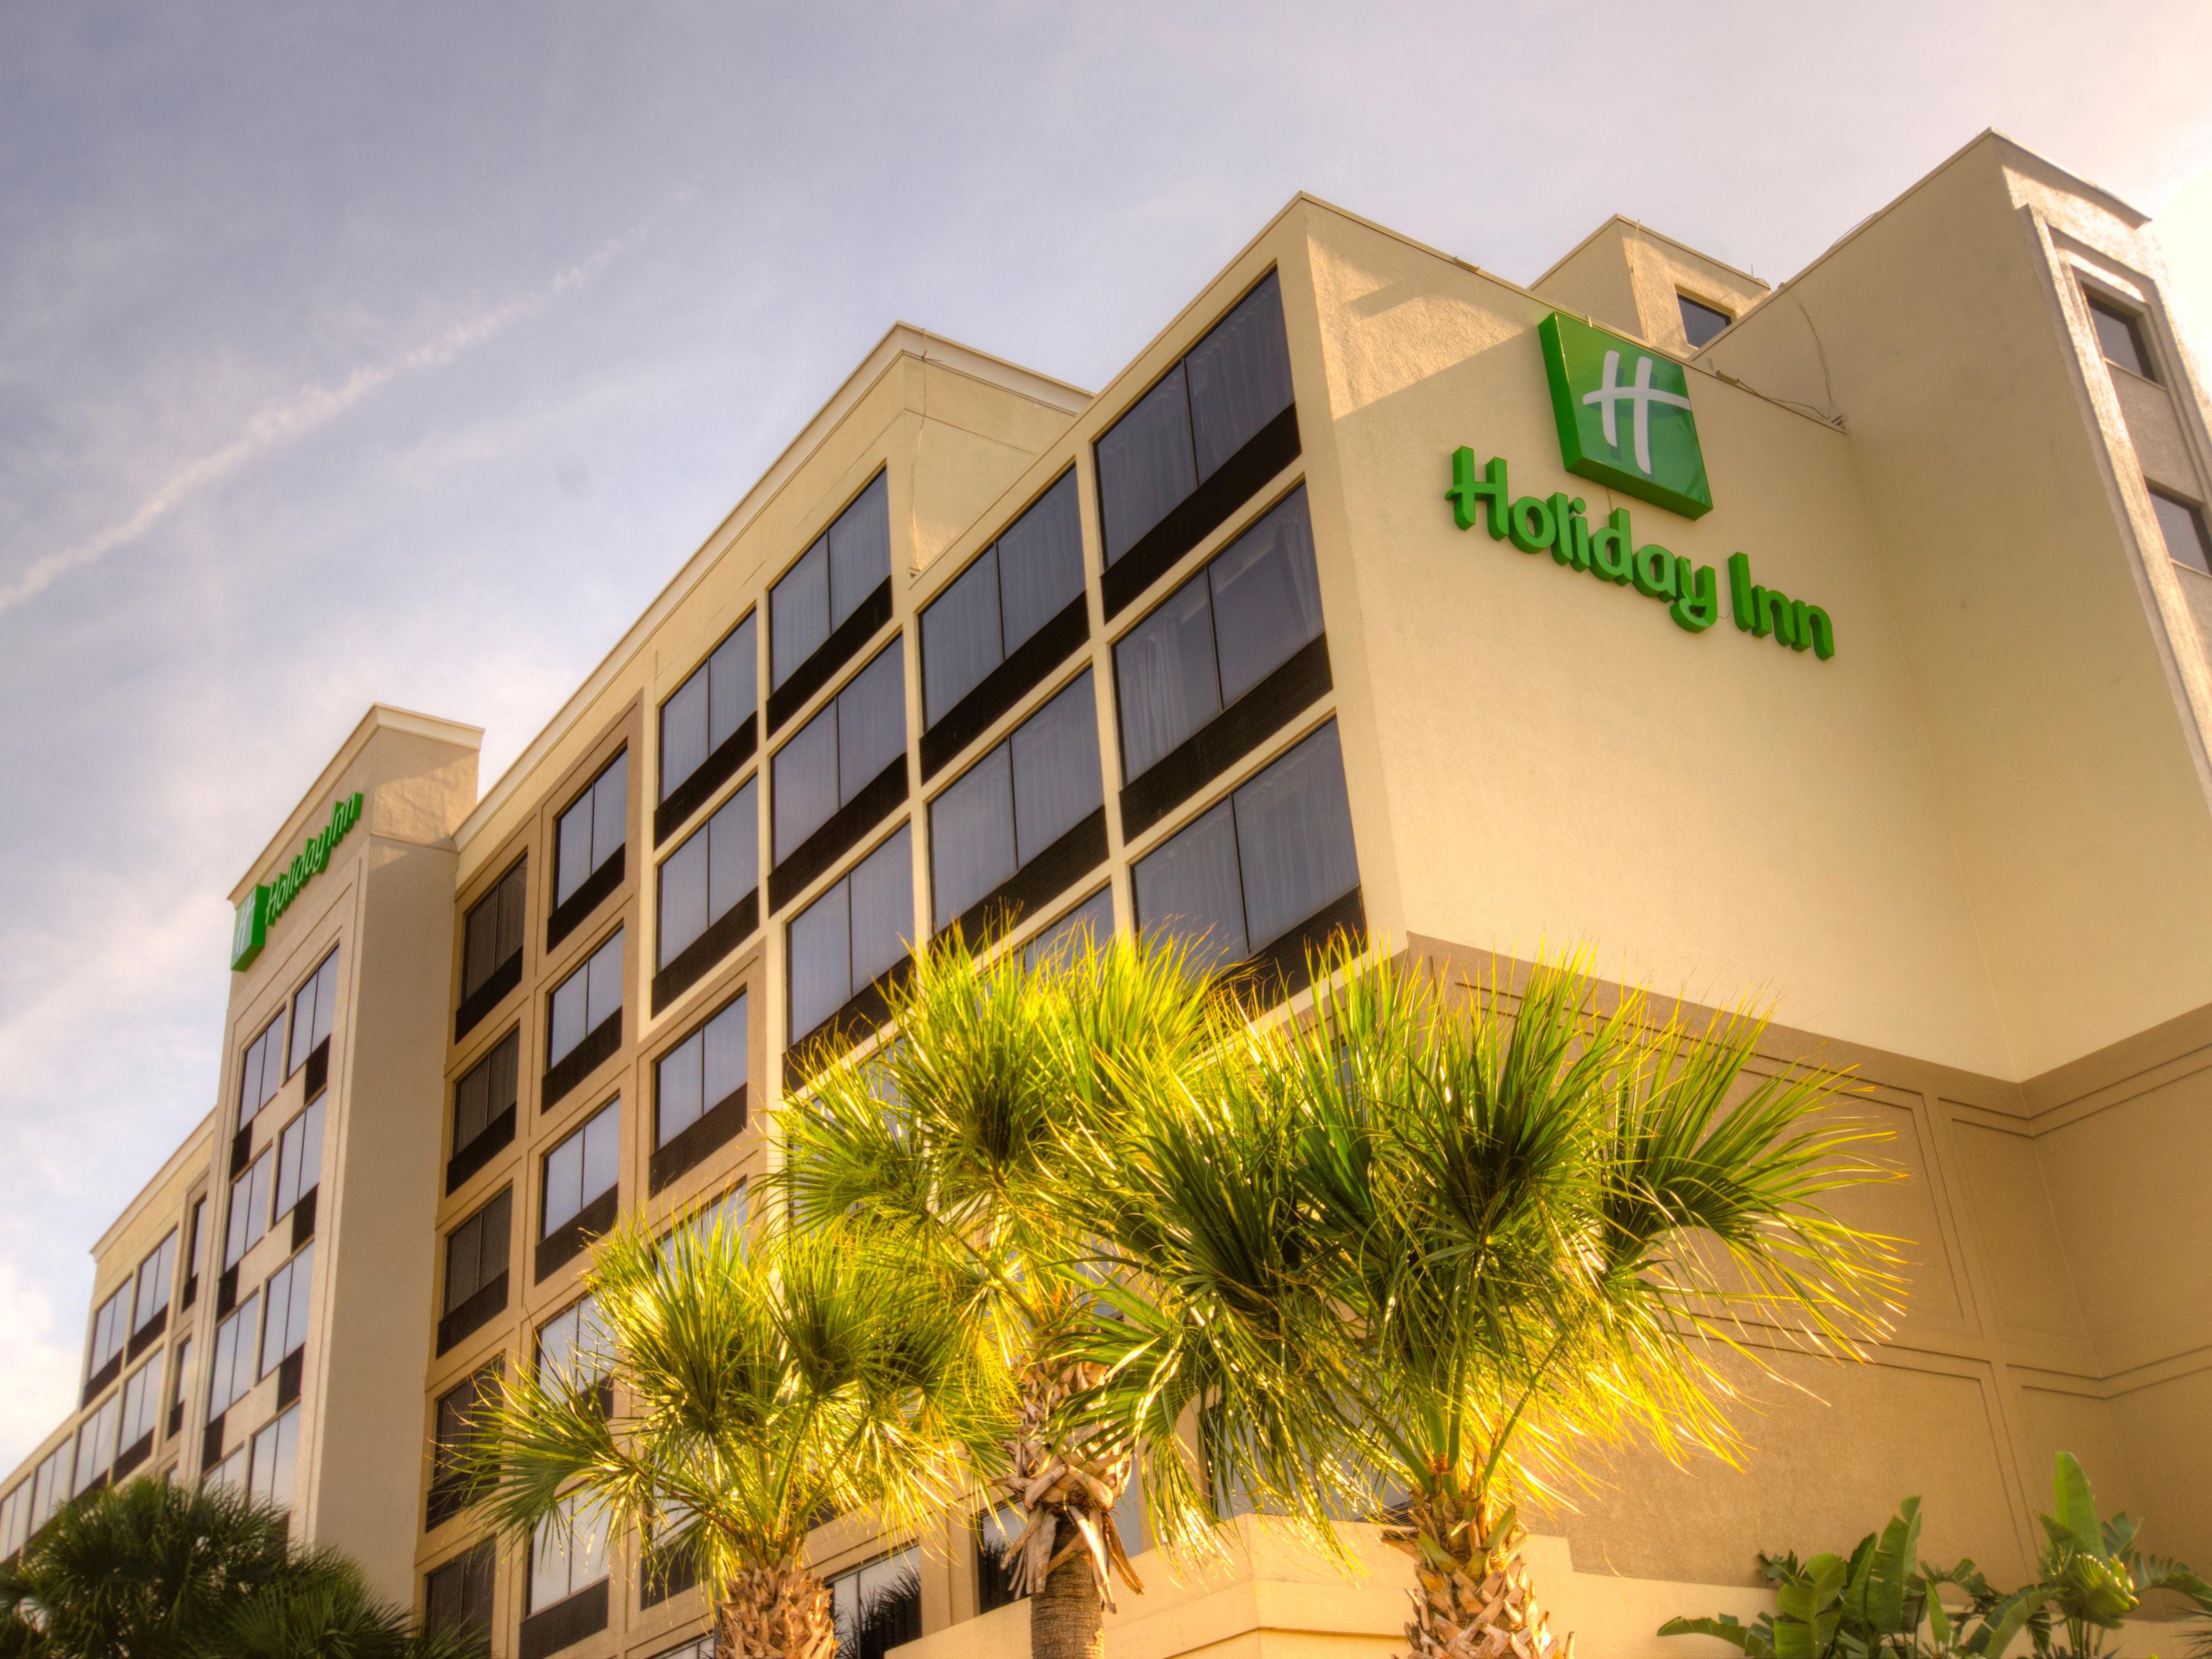 Holiday Inn Orlando 3892851590 4x3